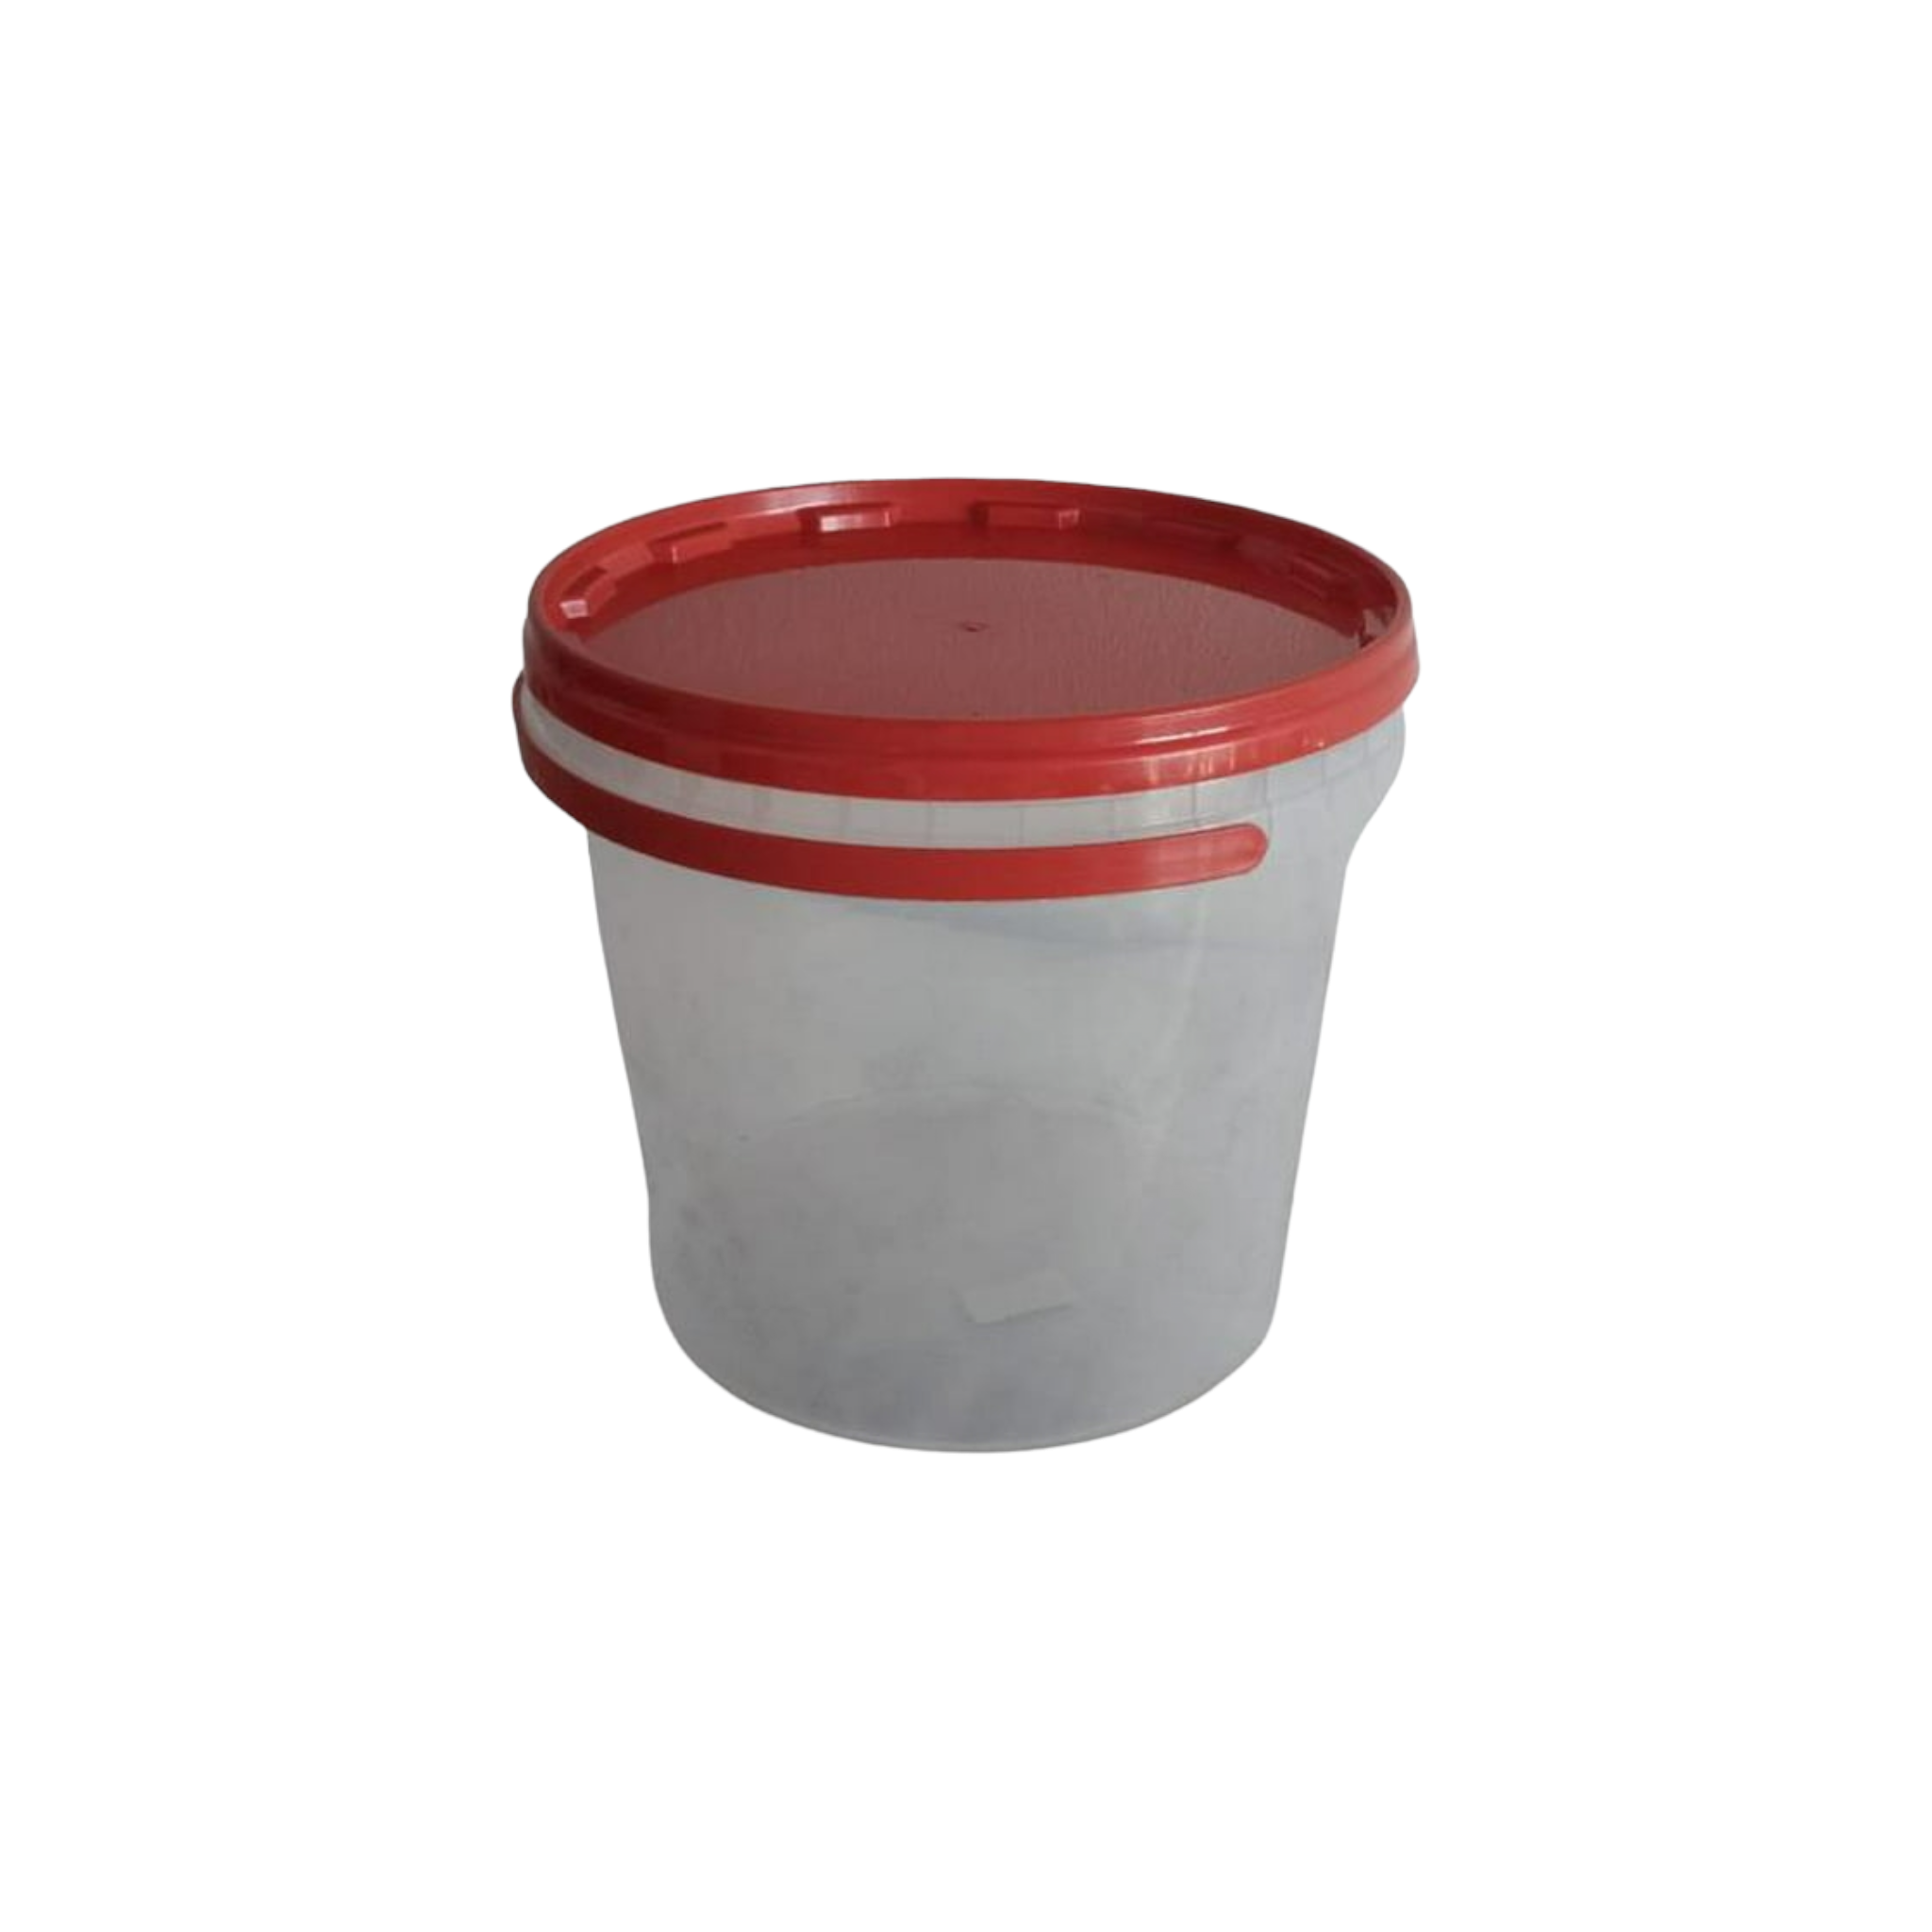 9L Plastic Bucket Tamper Proof Atchar Container Transparent